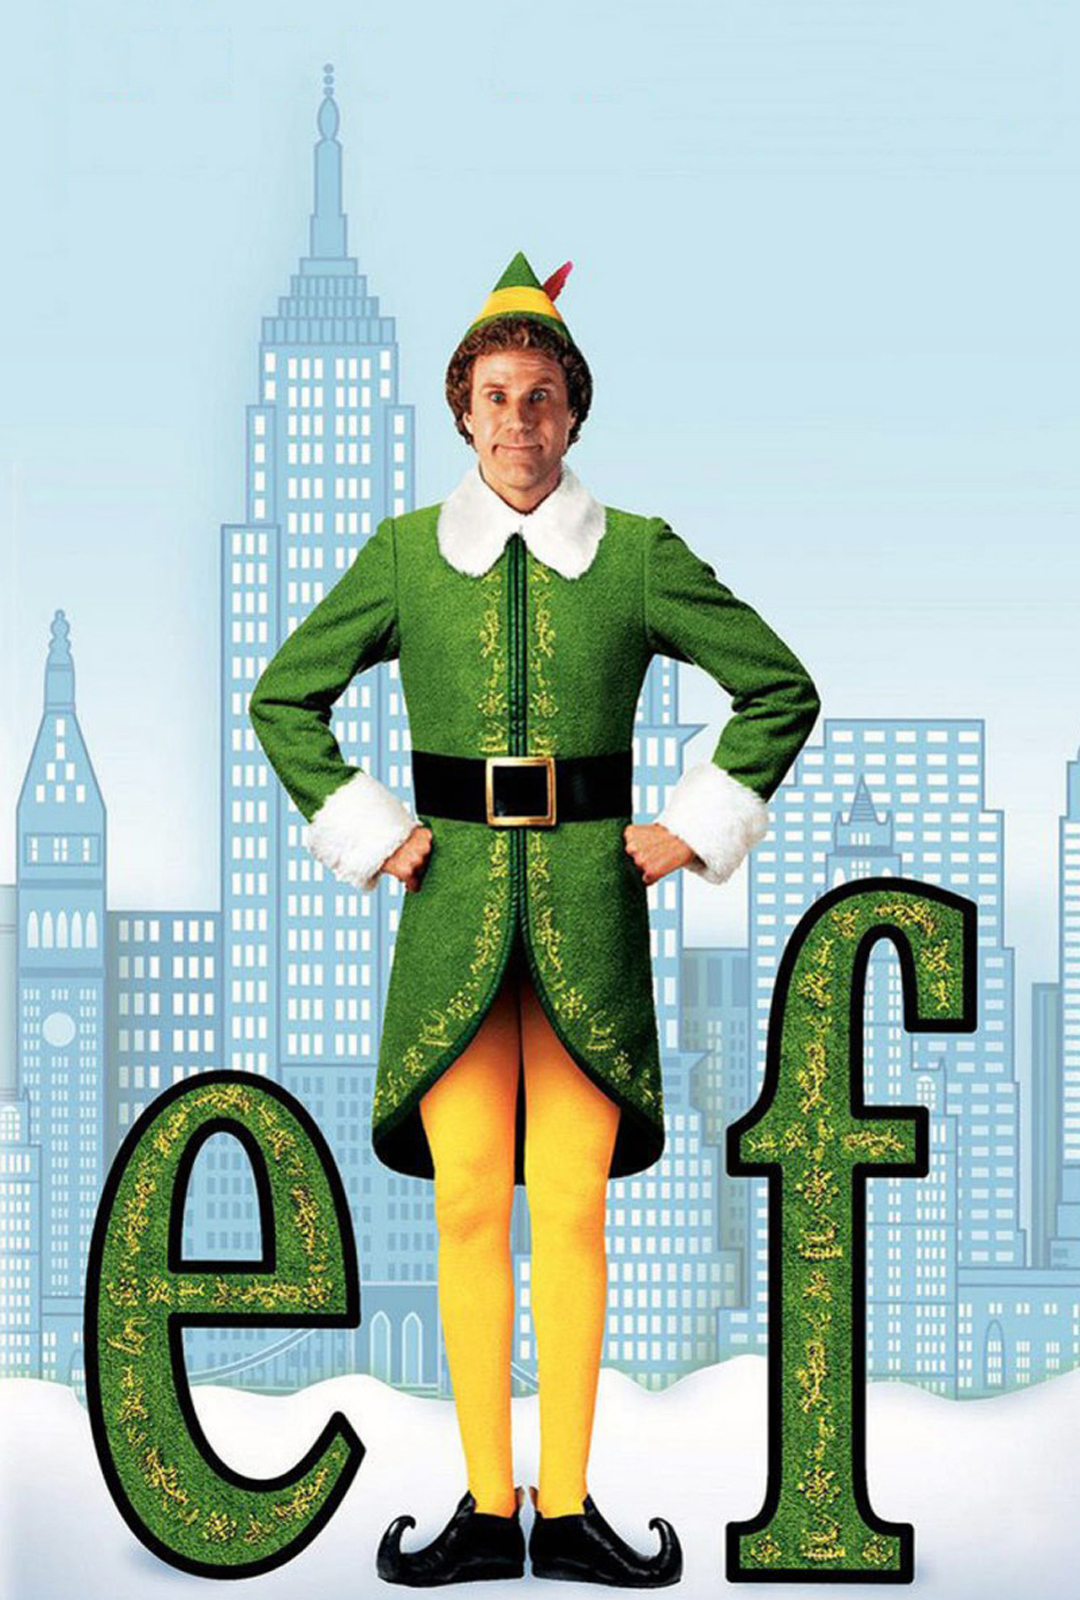 Aero Theatre Presents: Elf